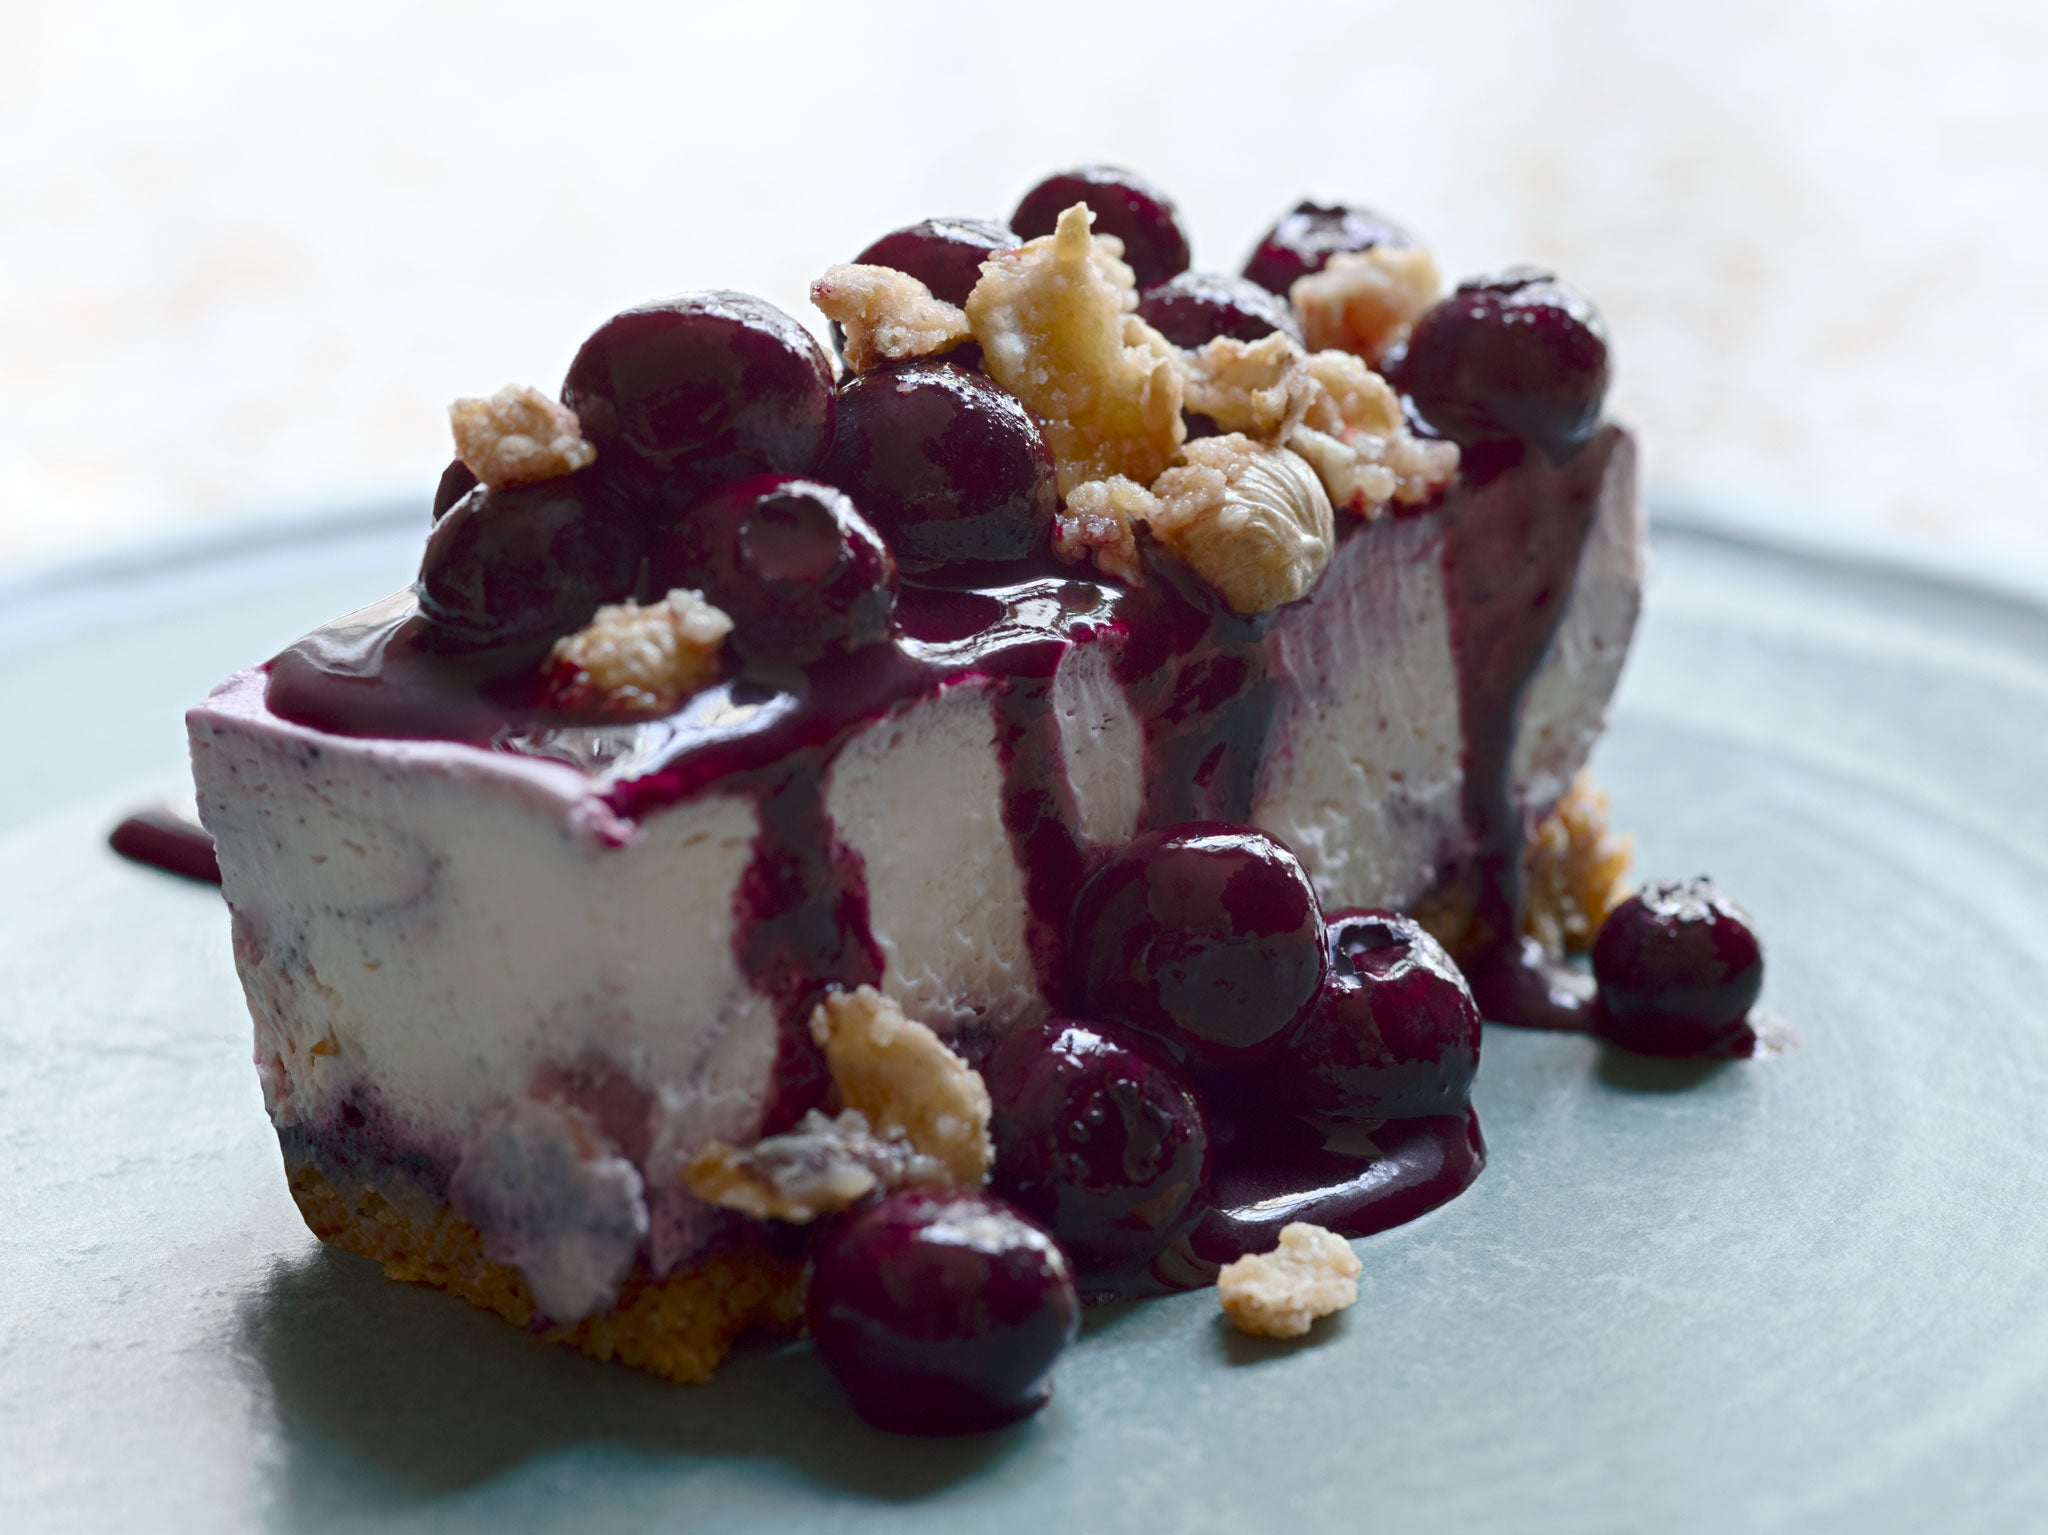 Dorset Blueberry, ricotta and cobnut cheesecake